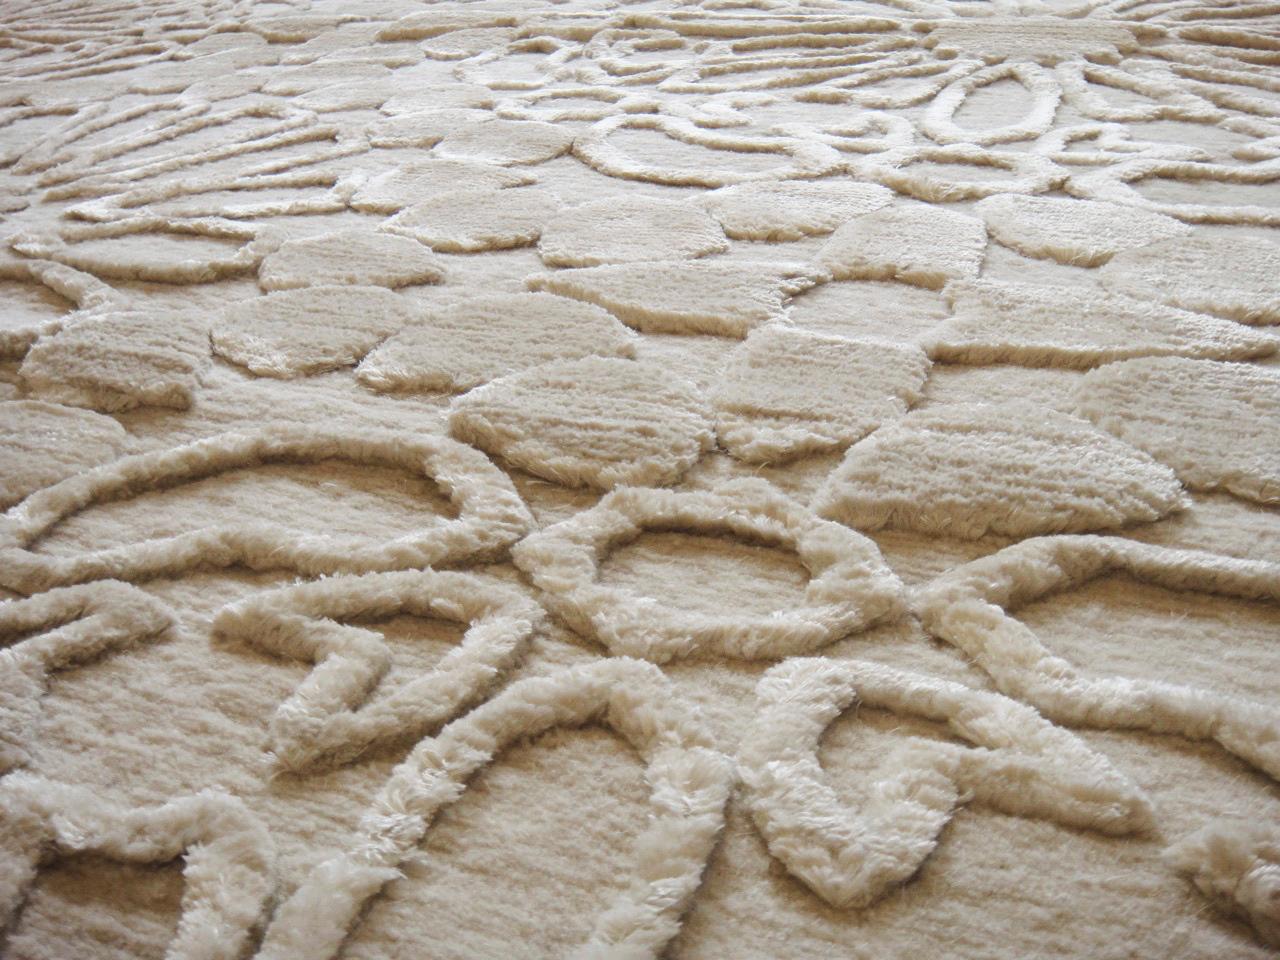 Nepalese 21st Century Carpet Rug Marrakesh in Himalayan Wool and Silk White, Ivory